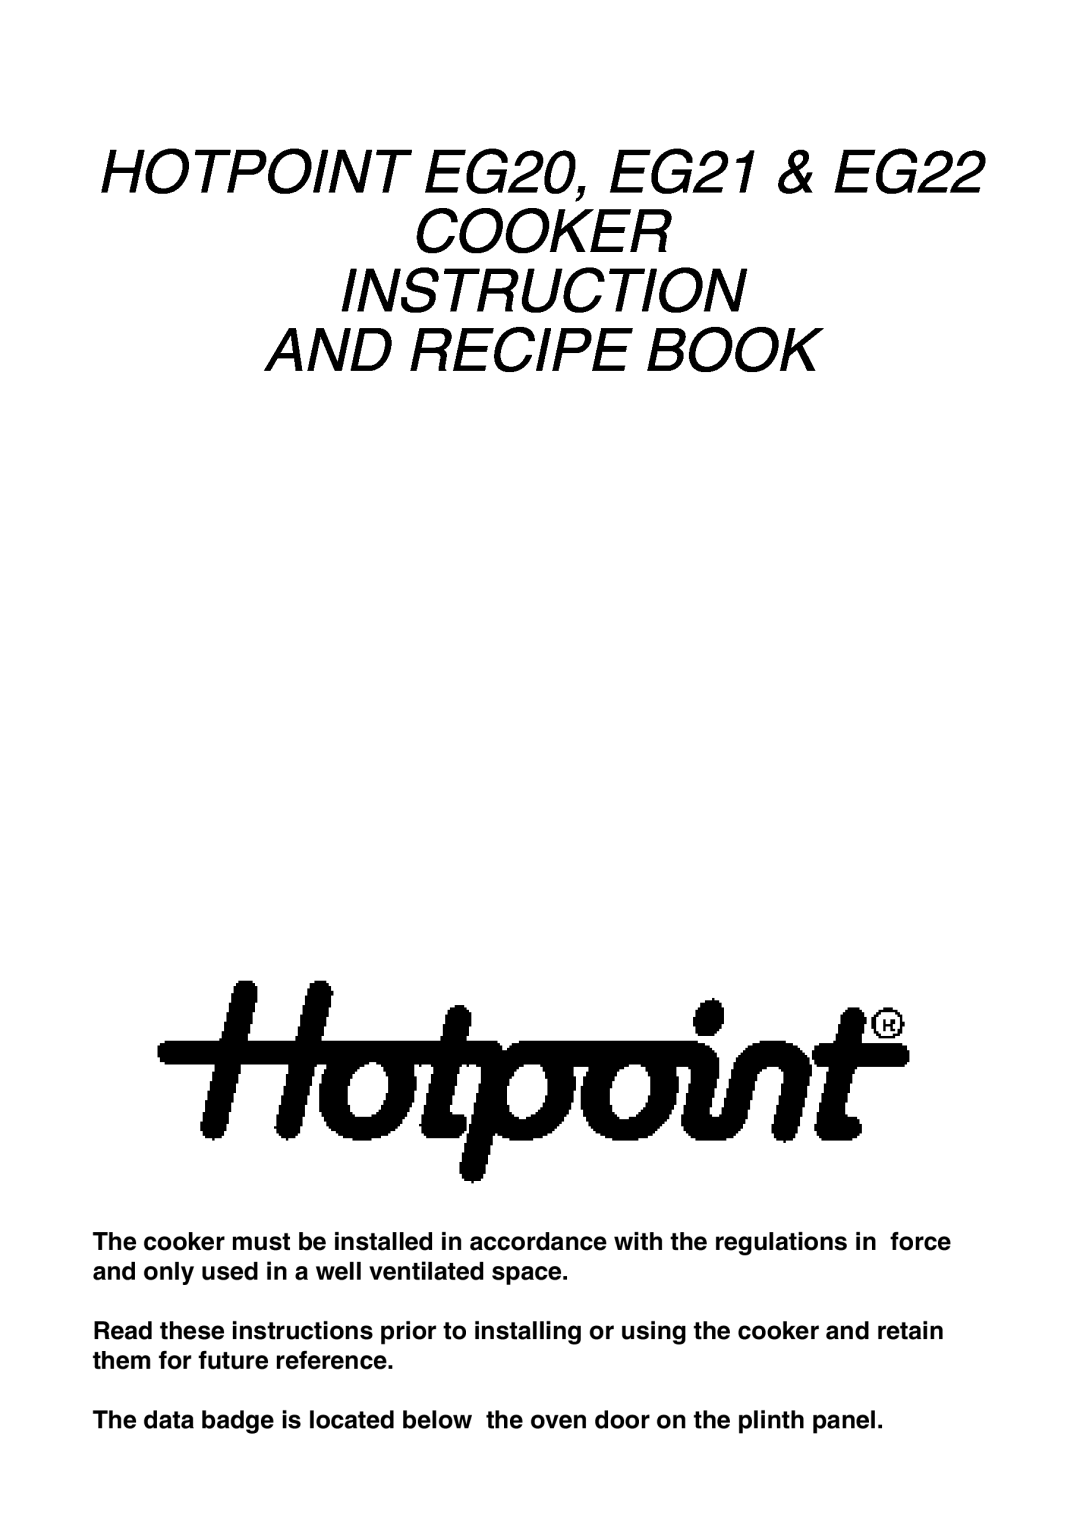 Hotpoint manual HOTPOINT EG20, EG21 & EG22 COOKER INSTRUCTION, And Recipe Book 